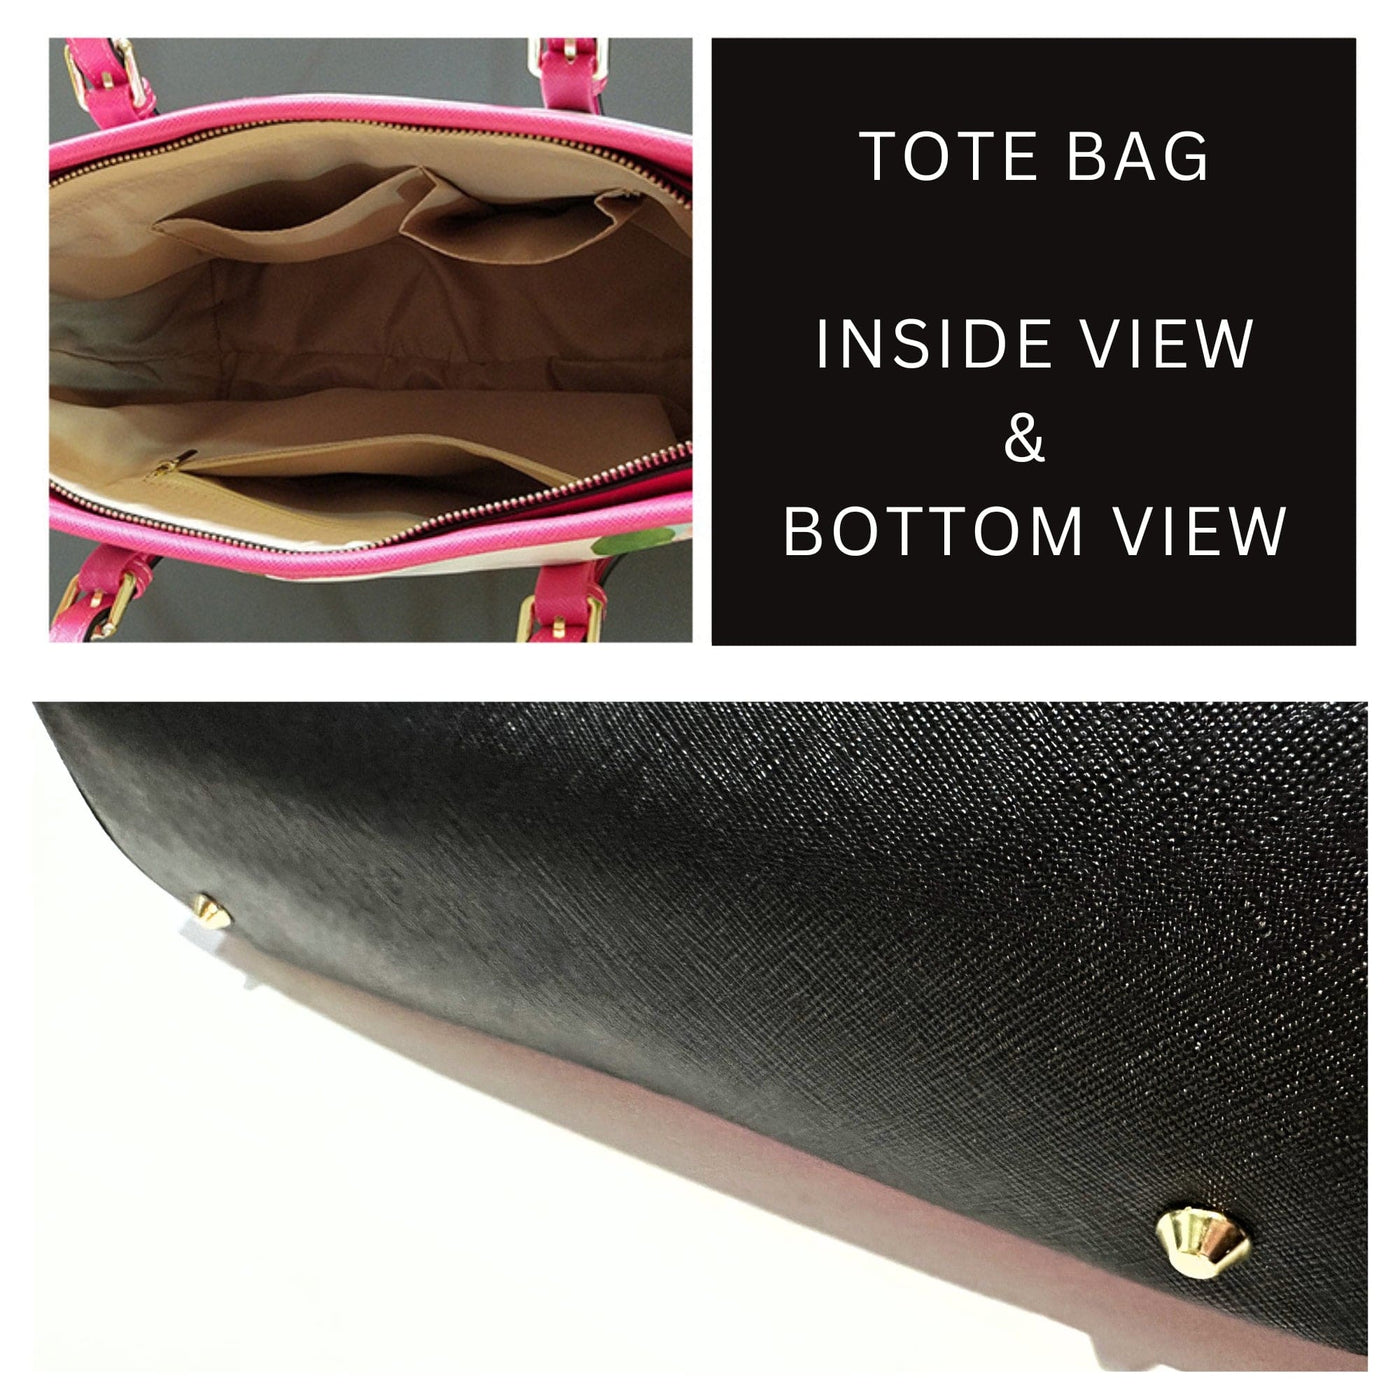 Large Leather Tote Shoulder Bag - Black Geometric Pattern B3554475 - Bags |